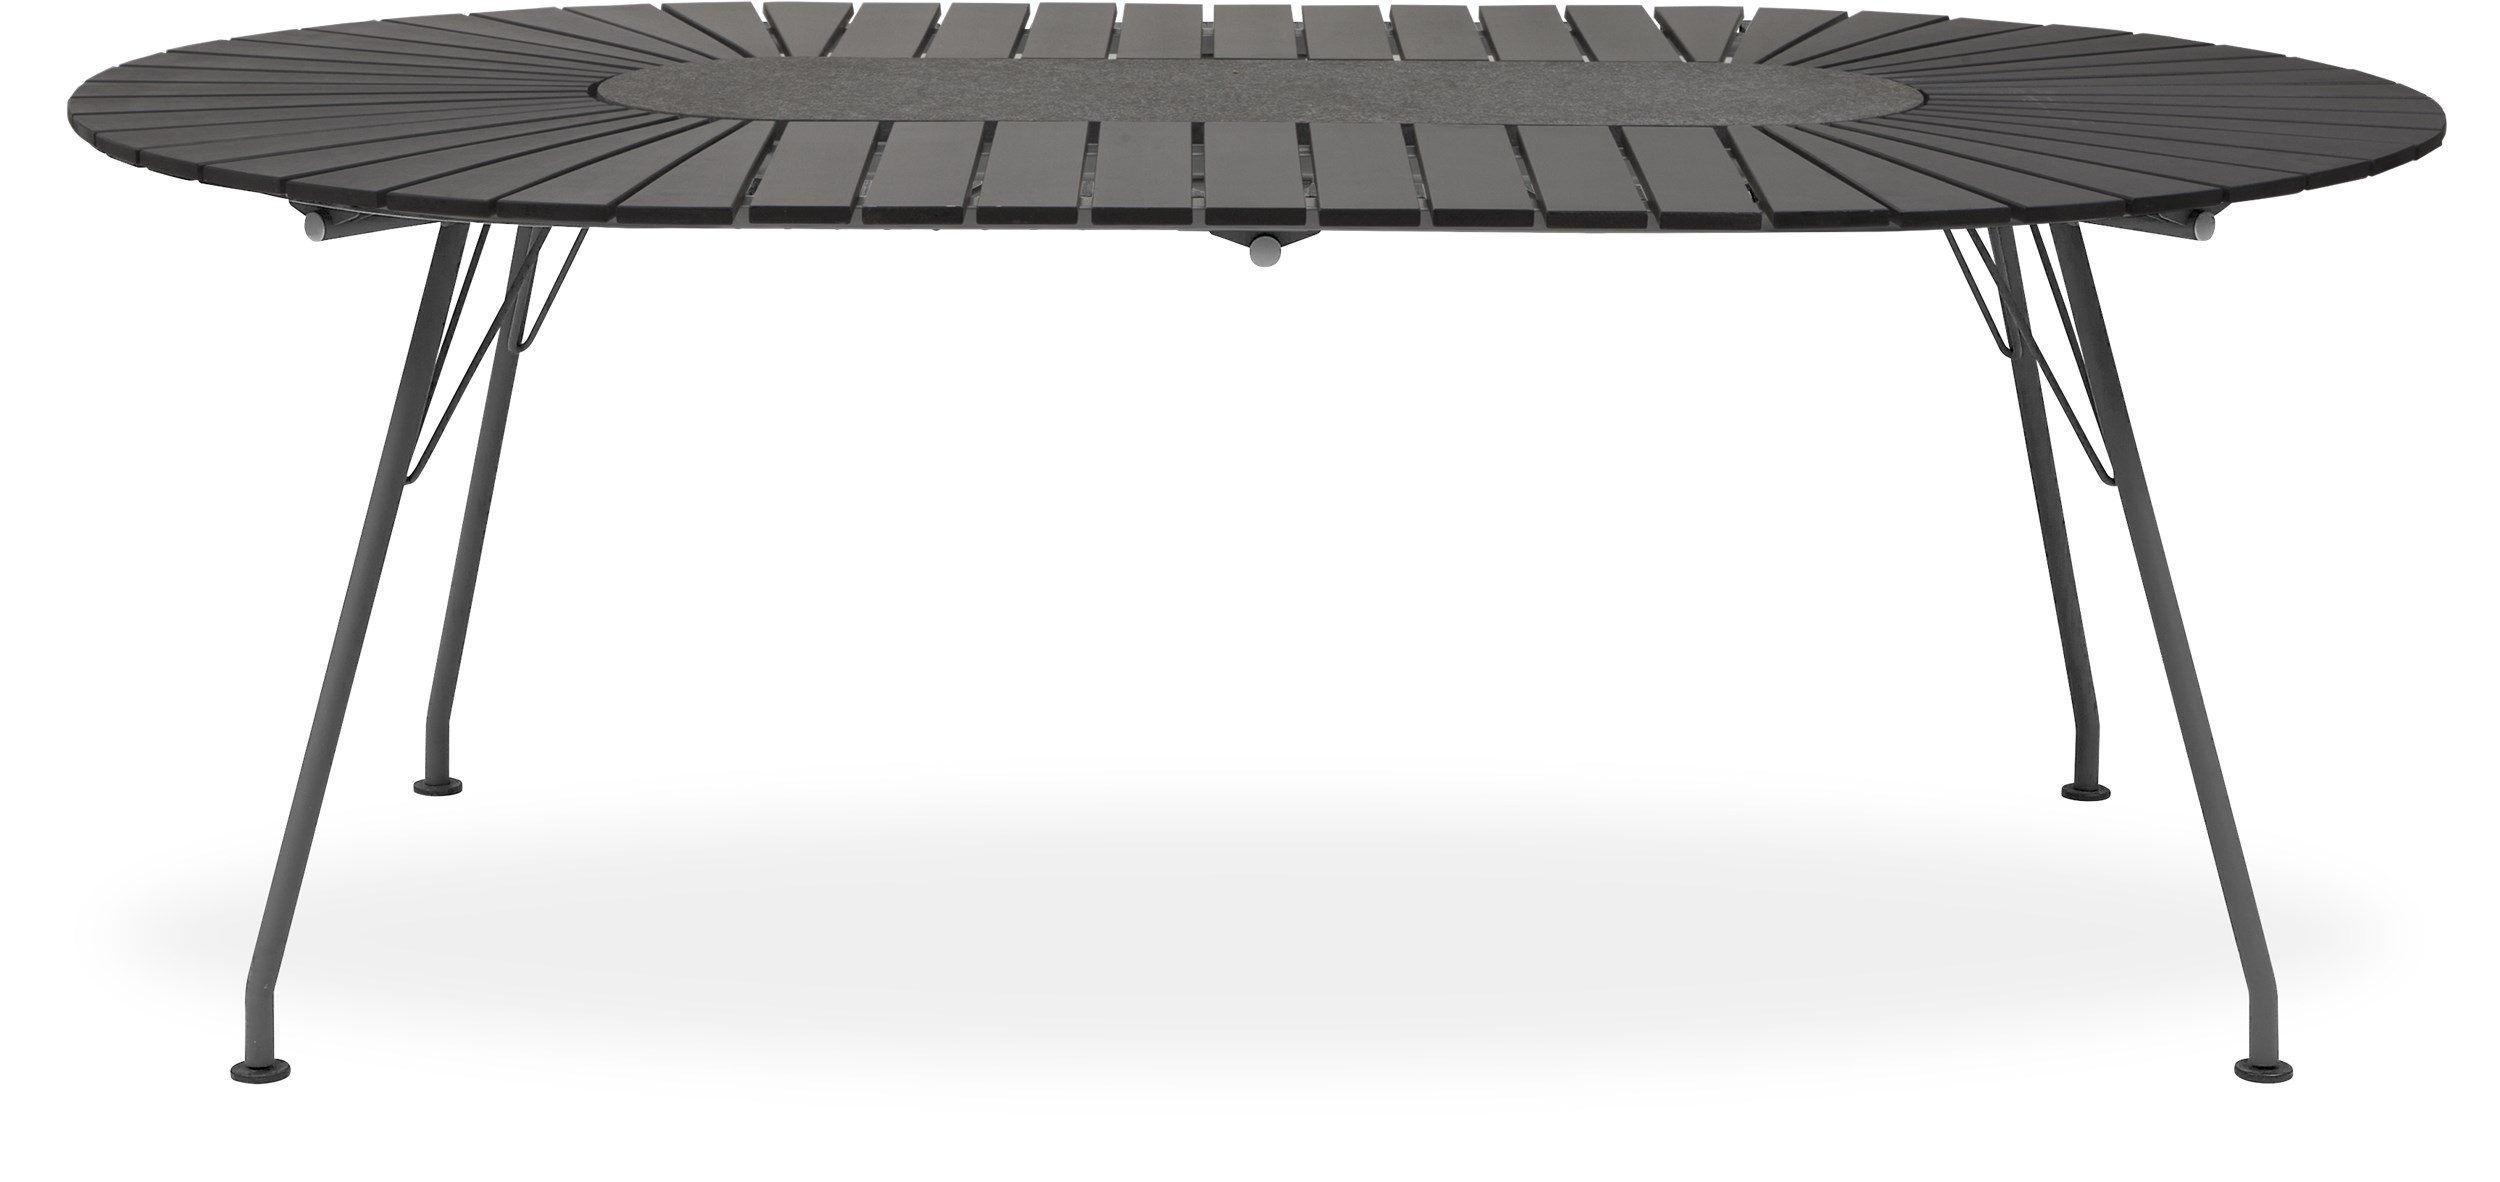 Eclipse Trädgårdsbord 200 x 110 x 74 cm - Svart polywood, granit i mitten och stomme i stålgrå metall